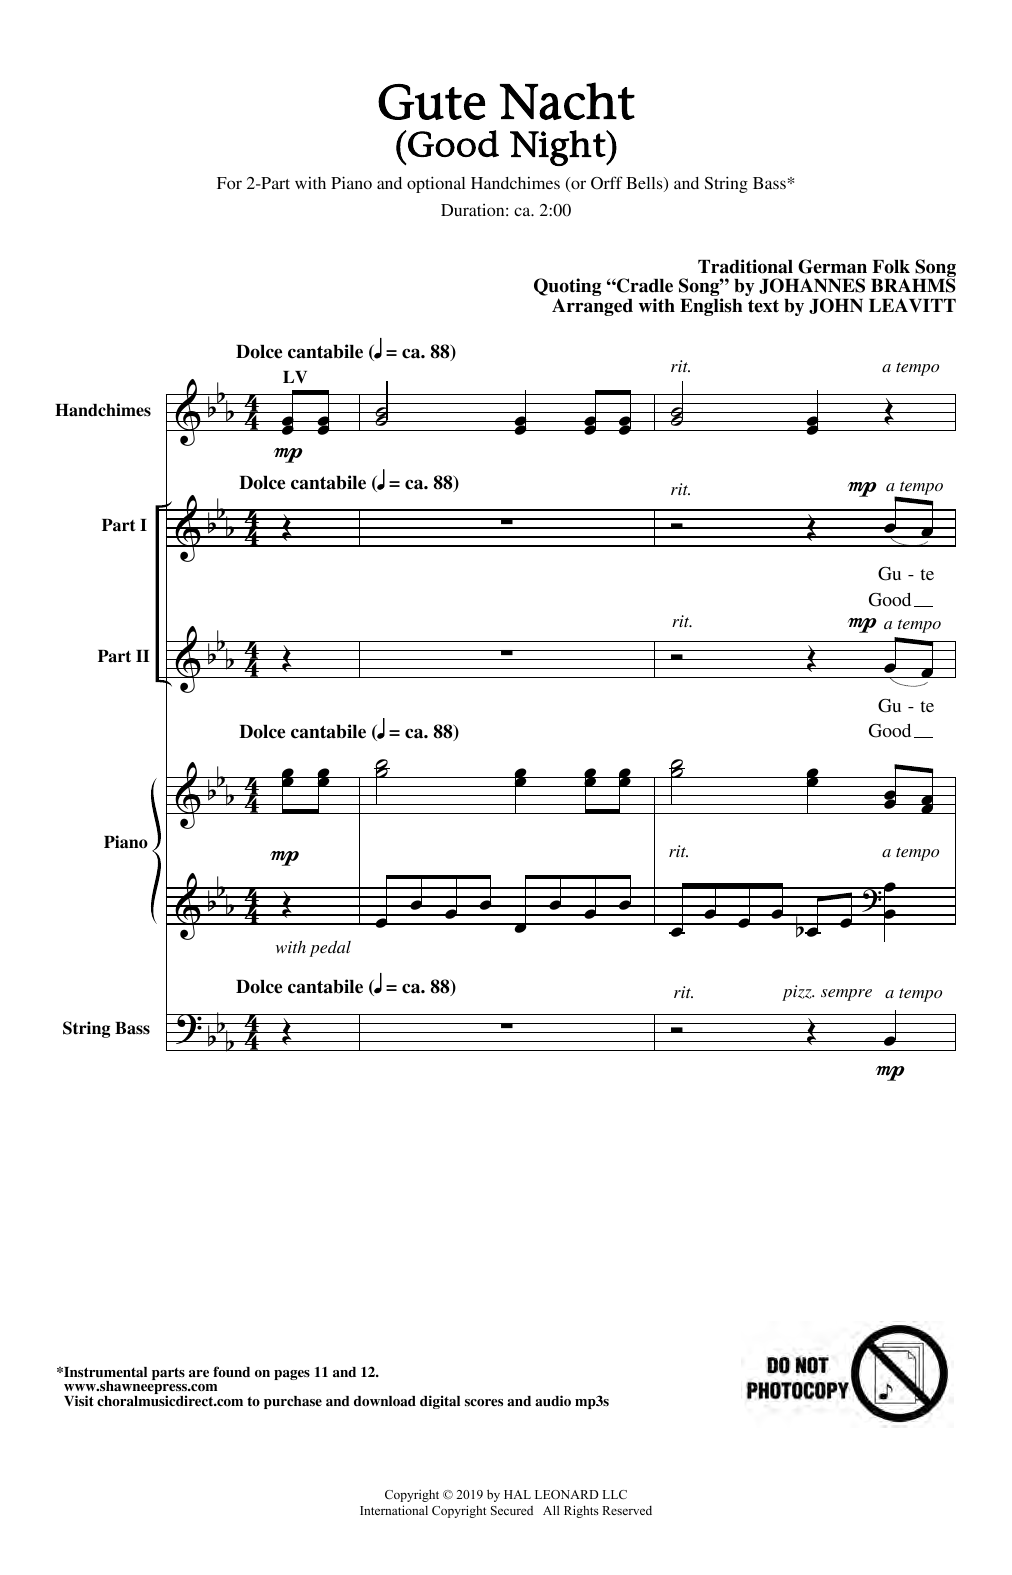 Johannes Brahms Gute Nacht (Good Night) (arr. John Leavitt) Sheet Music Notes & Chords for 2-Part Choir - Download or Print PDF